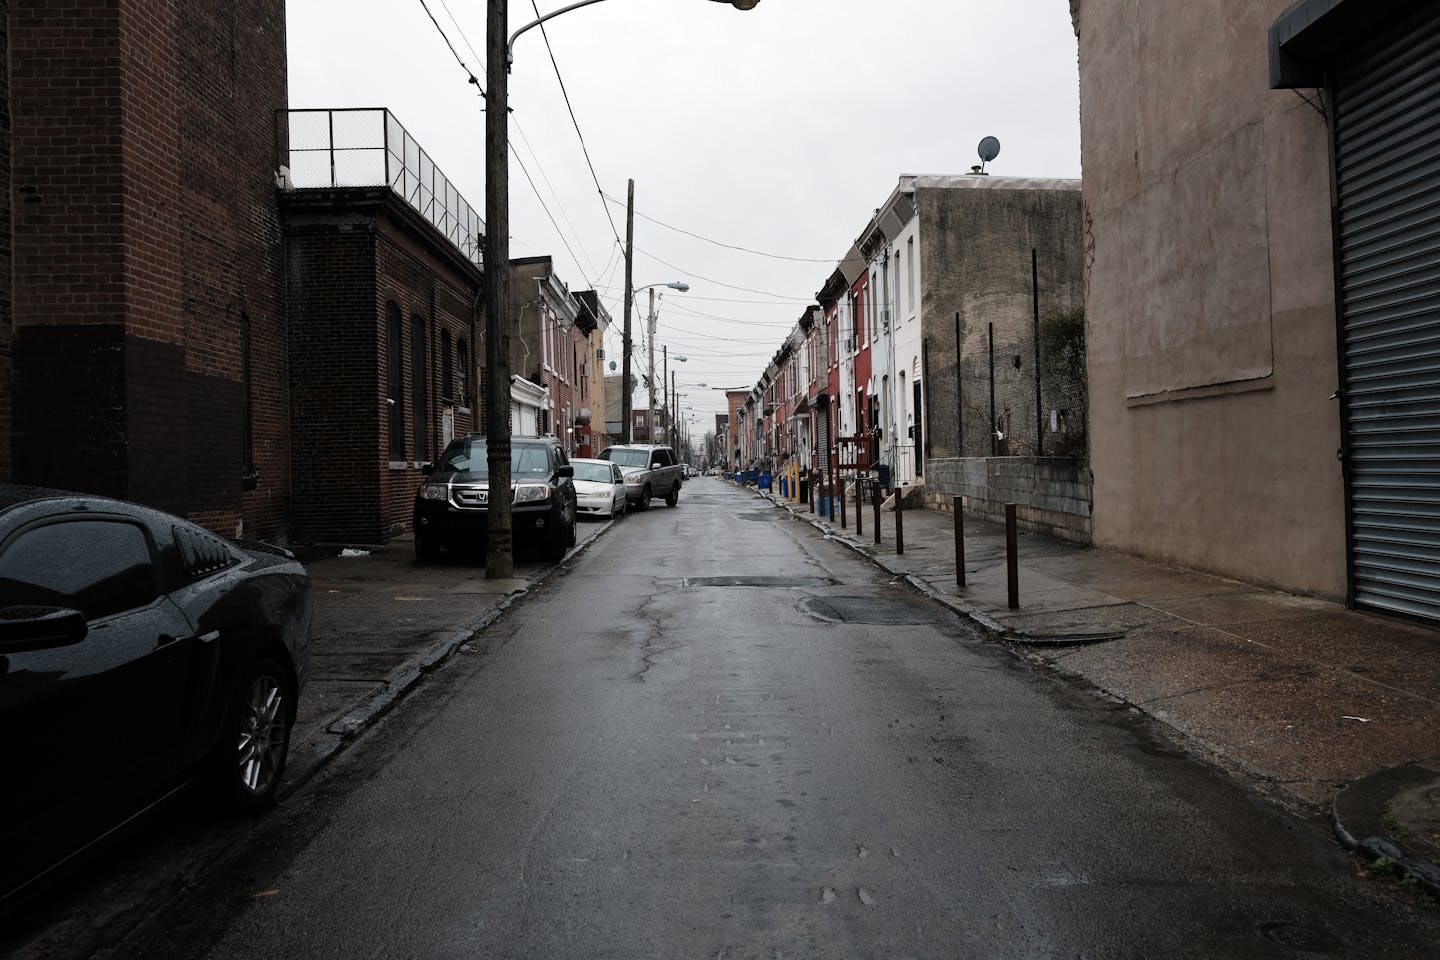 View of empty street in Kensington neighborhood of North Philadelphia